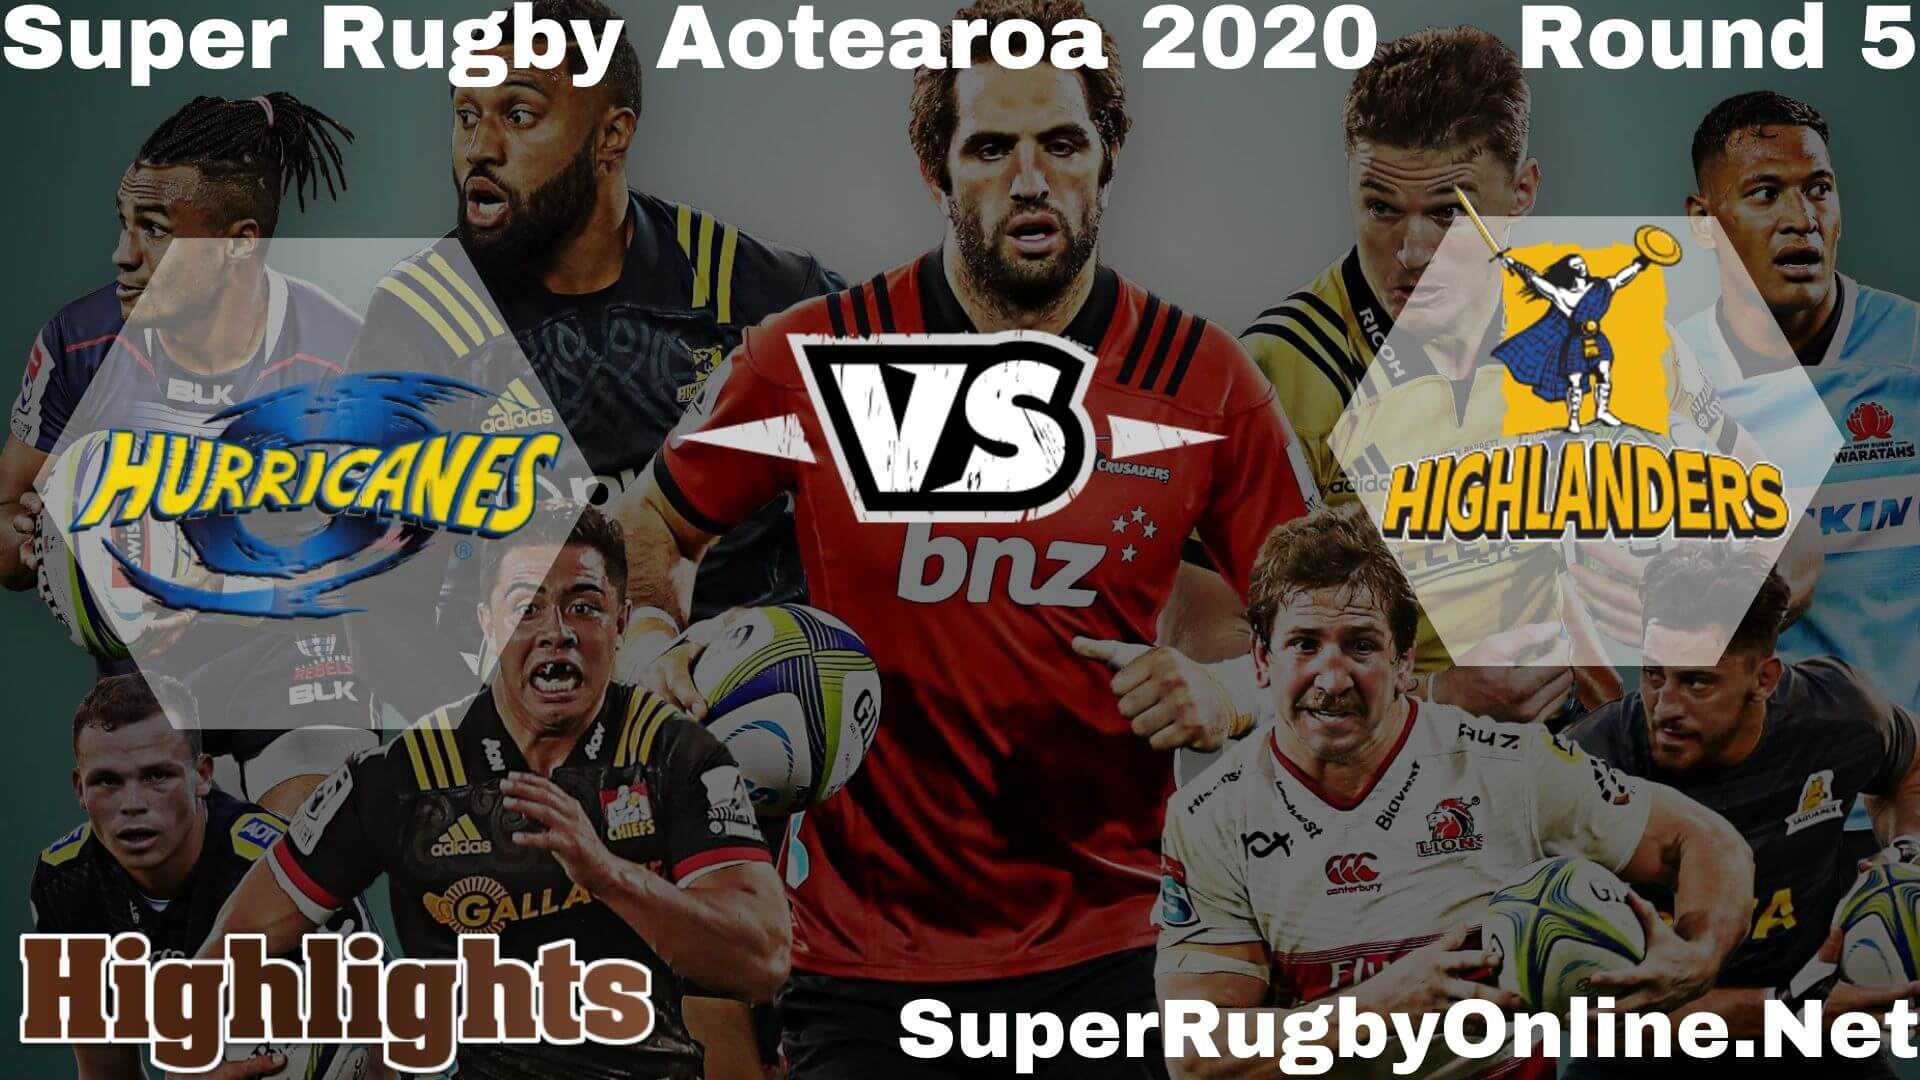 Hurricanes Vs Highlanders Rd 5 Highlights 2020 Super Rugby